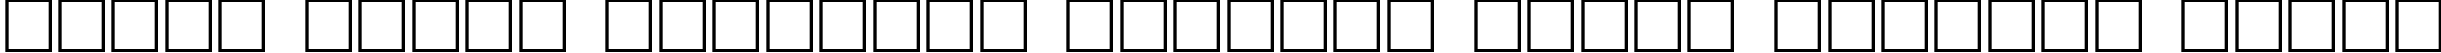 Пример написания шрифтом Grids n Things 2 текста на белорусском